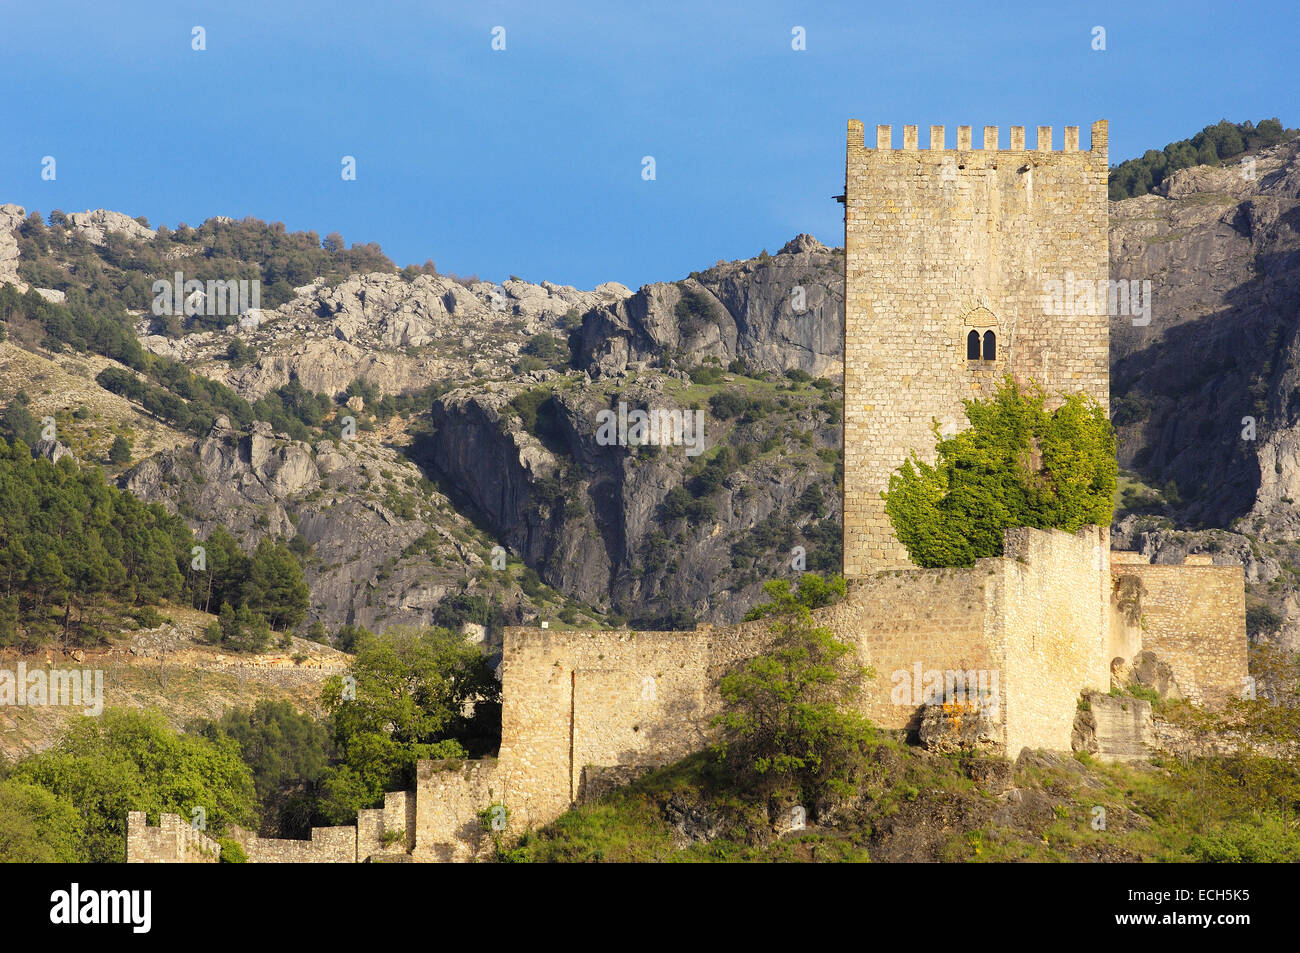 Yedra Castle in Cazorla village, Sierra de Cazorla Segura y Las Villas Natural Park, province of Jaén, Andalusia, Spain, Europe Stock Photo